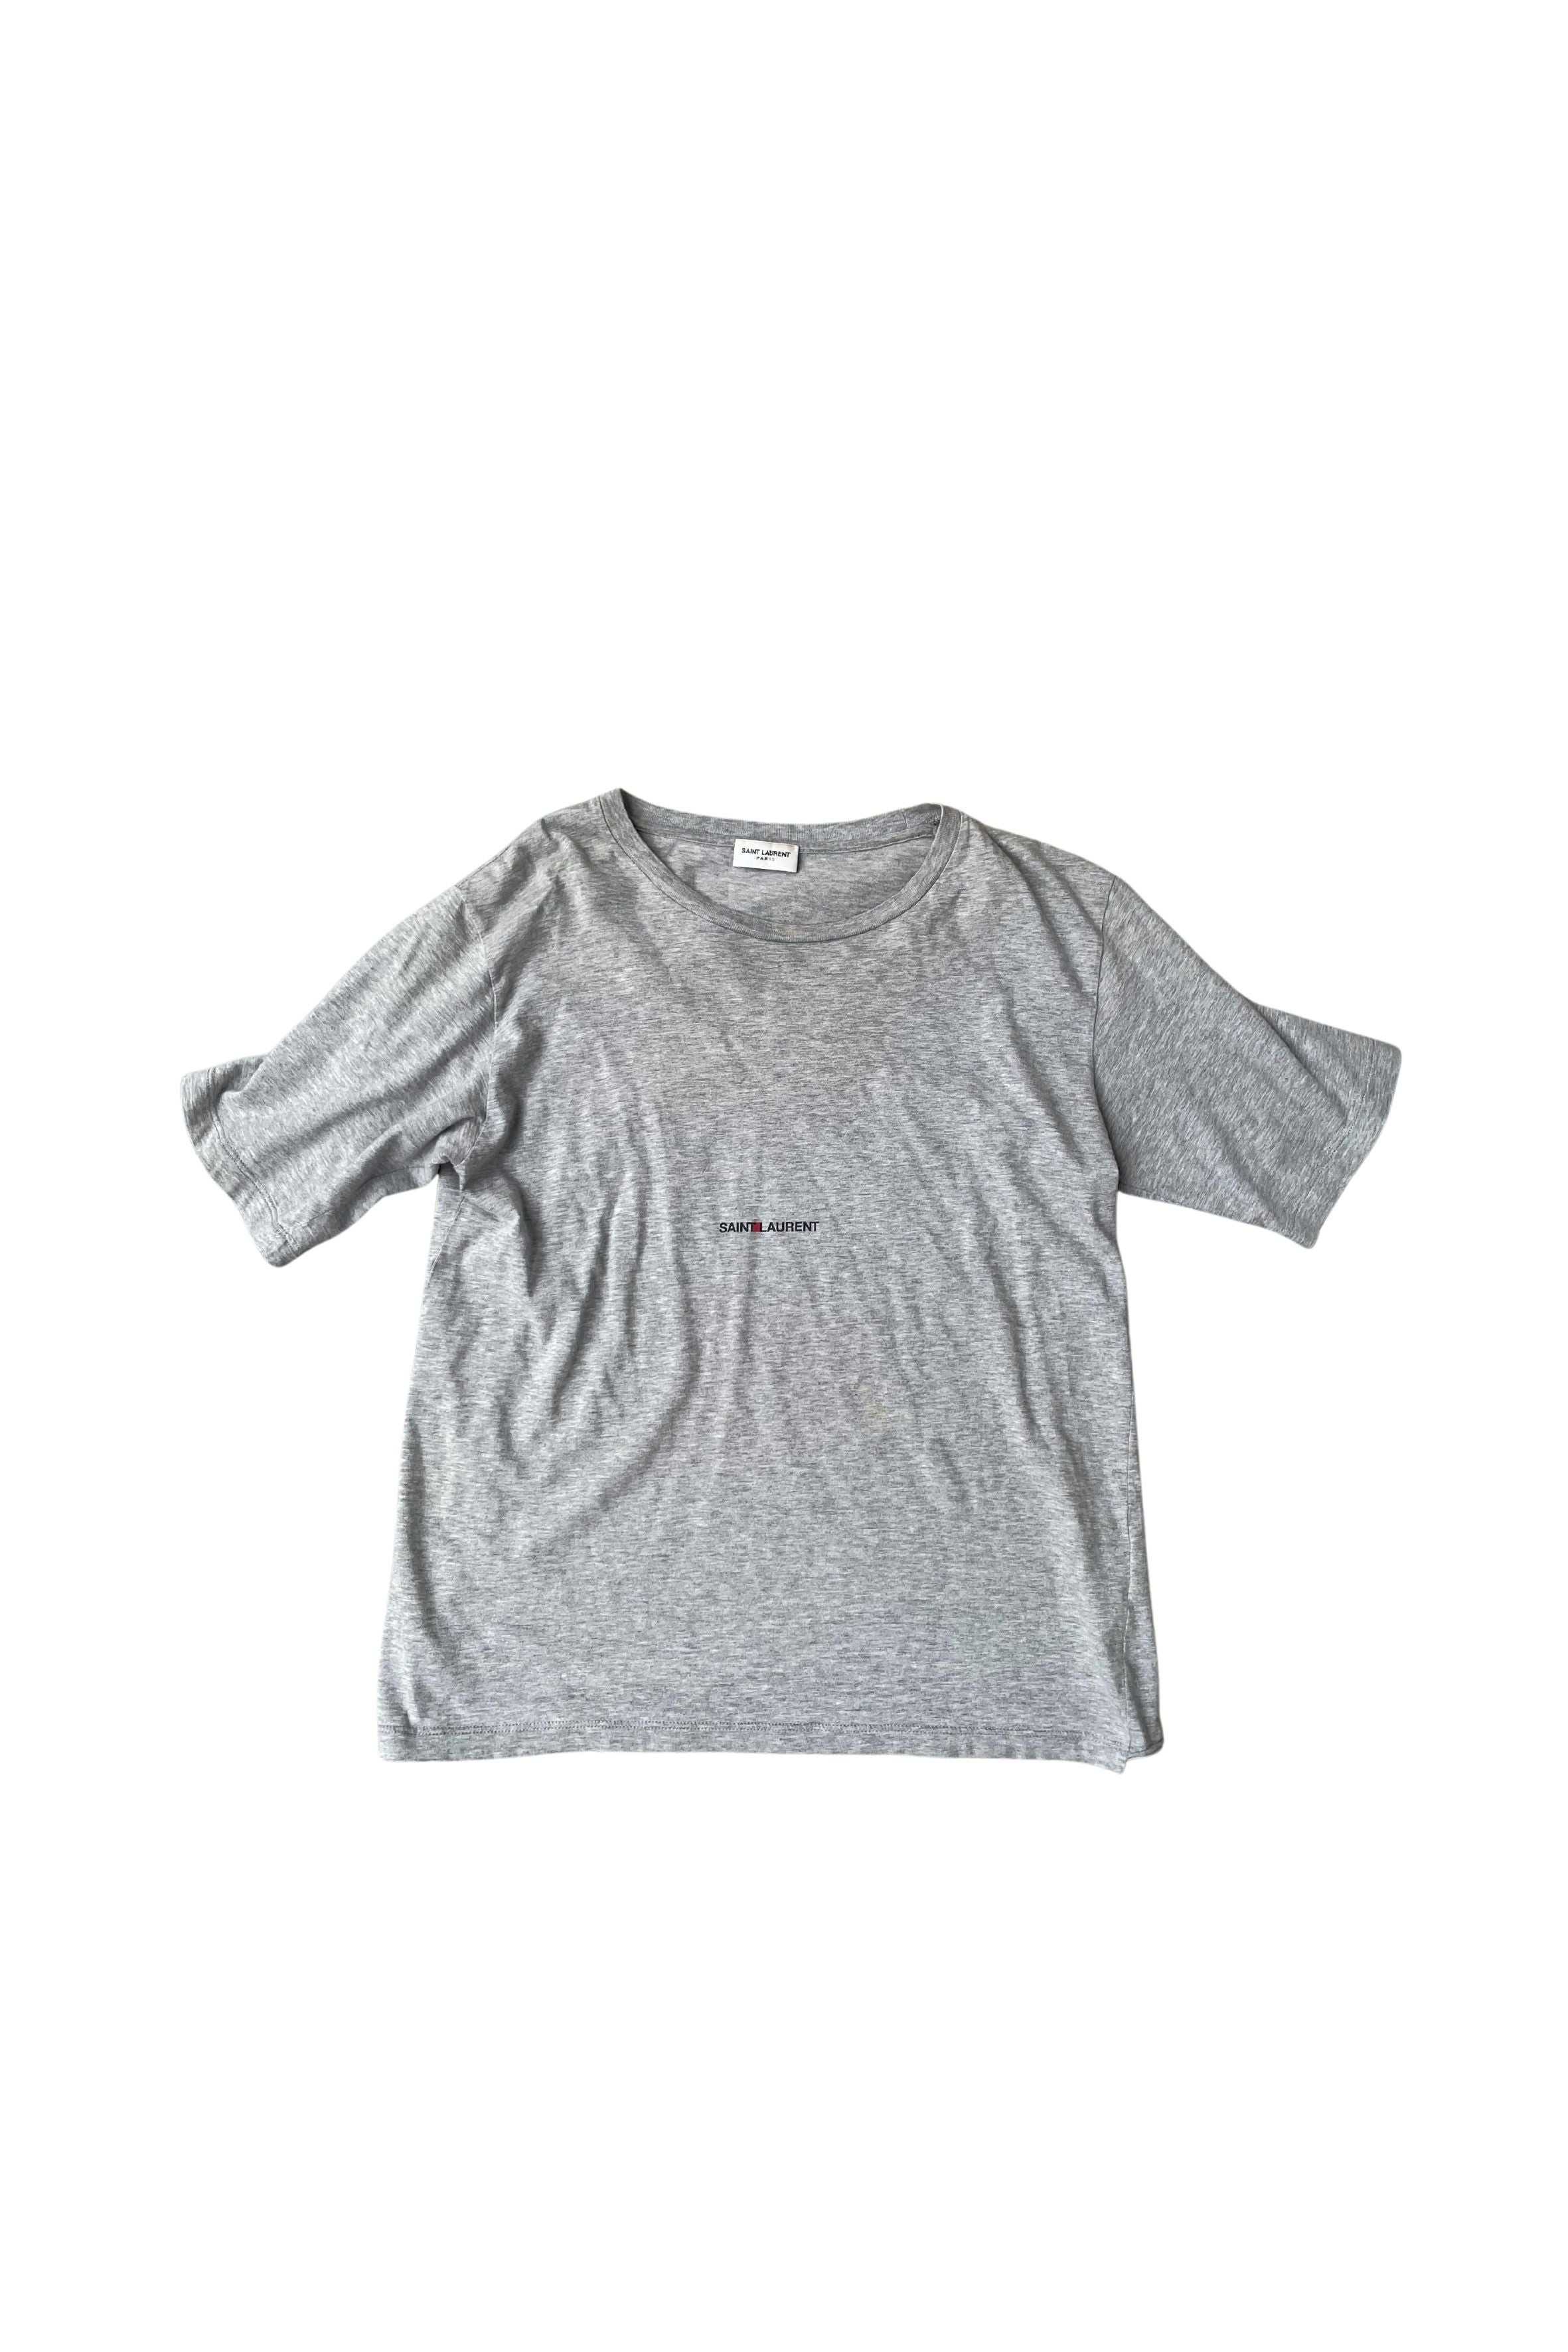 Saint Laurent Grey Classic Rive Gauche Logo T-Shirt XS